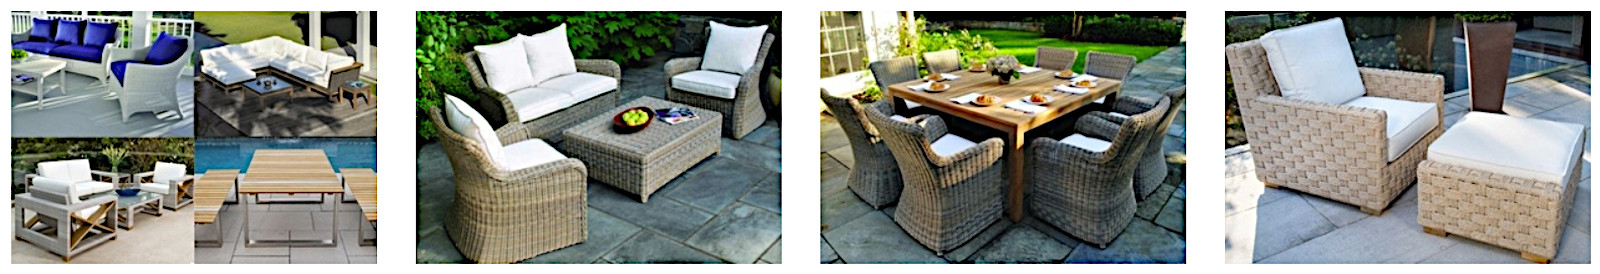 Good Buy Kingsley Bate teak garden furniture